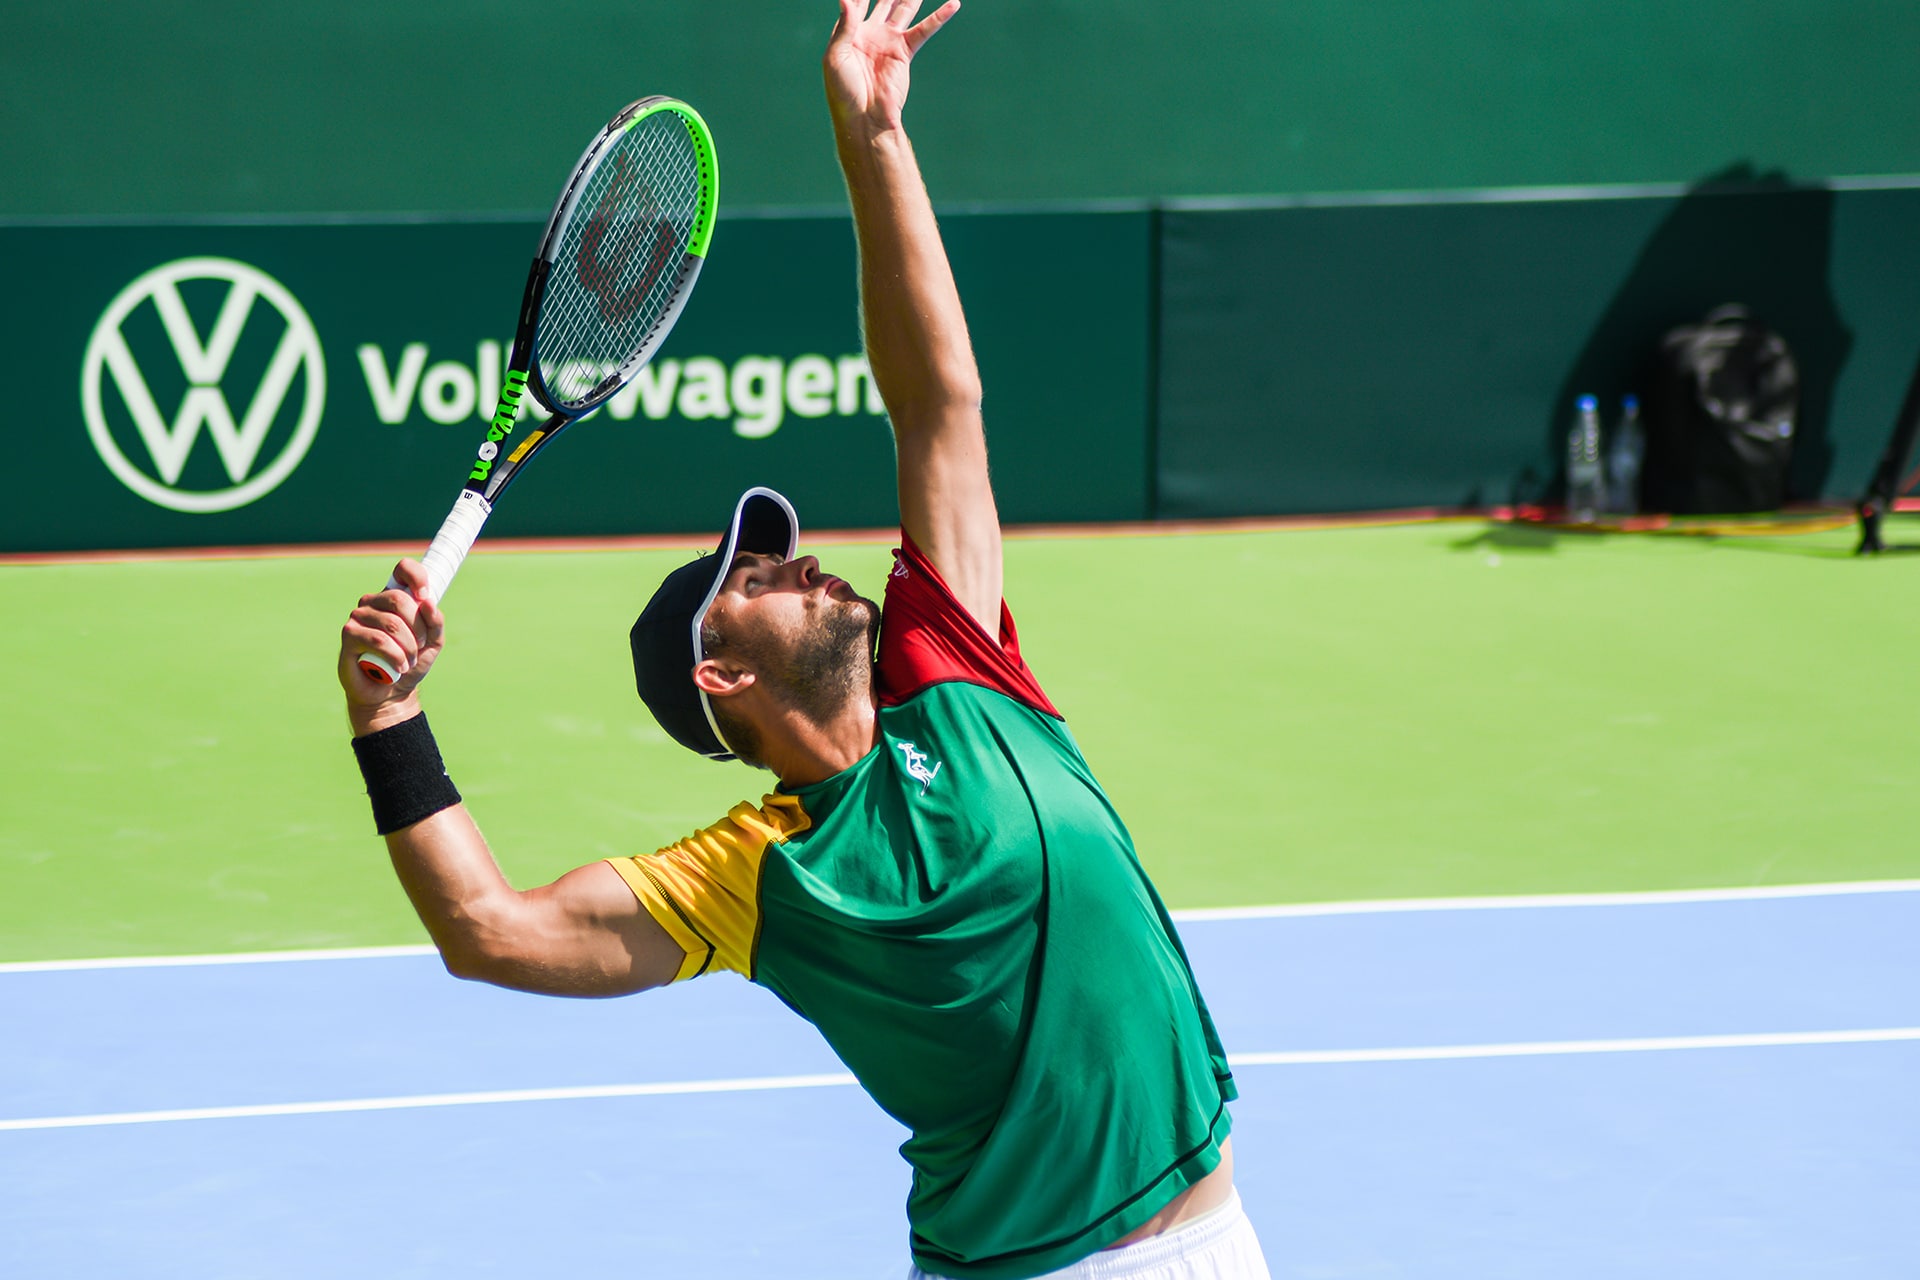 KOSMOCAR VOLKSWAGEN ΕΛΛΑΣ ΛΙΘΟΥΑΝΙΑ DAVIS CUP 6 Η Kosmocar-Volkswagen μέγας χορηγός της Εθνικής Ομάδας Τένις για το Davis Cup